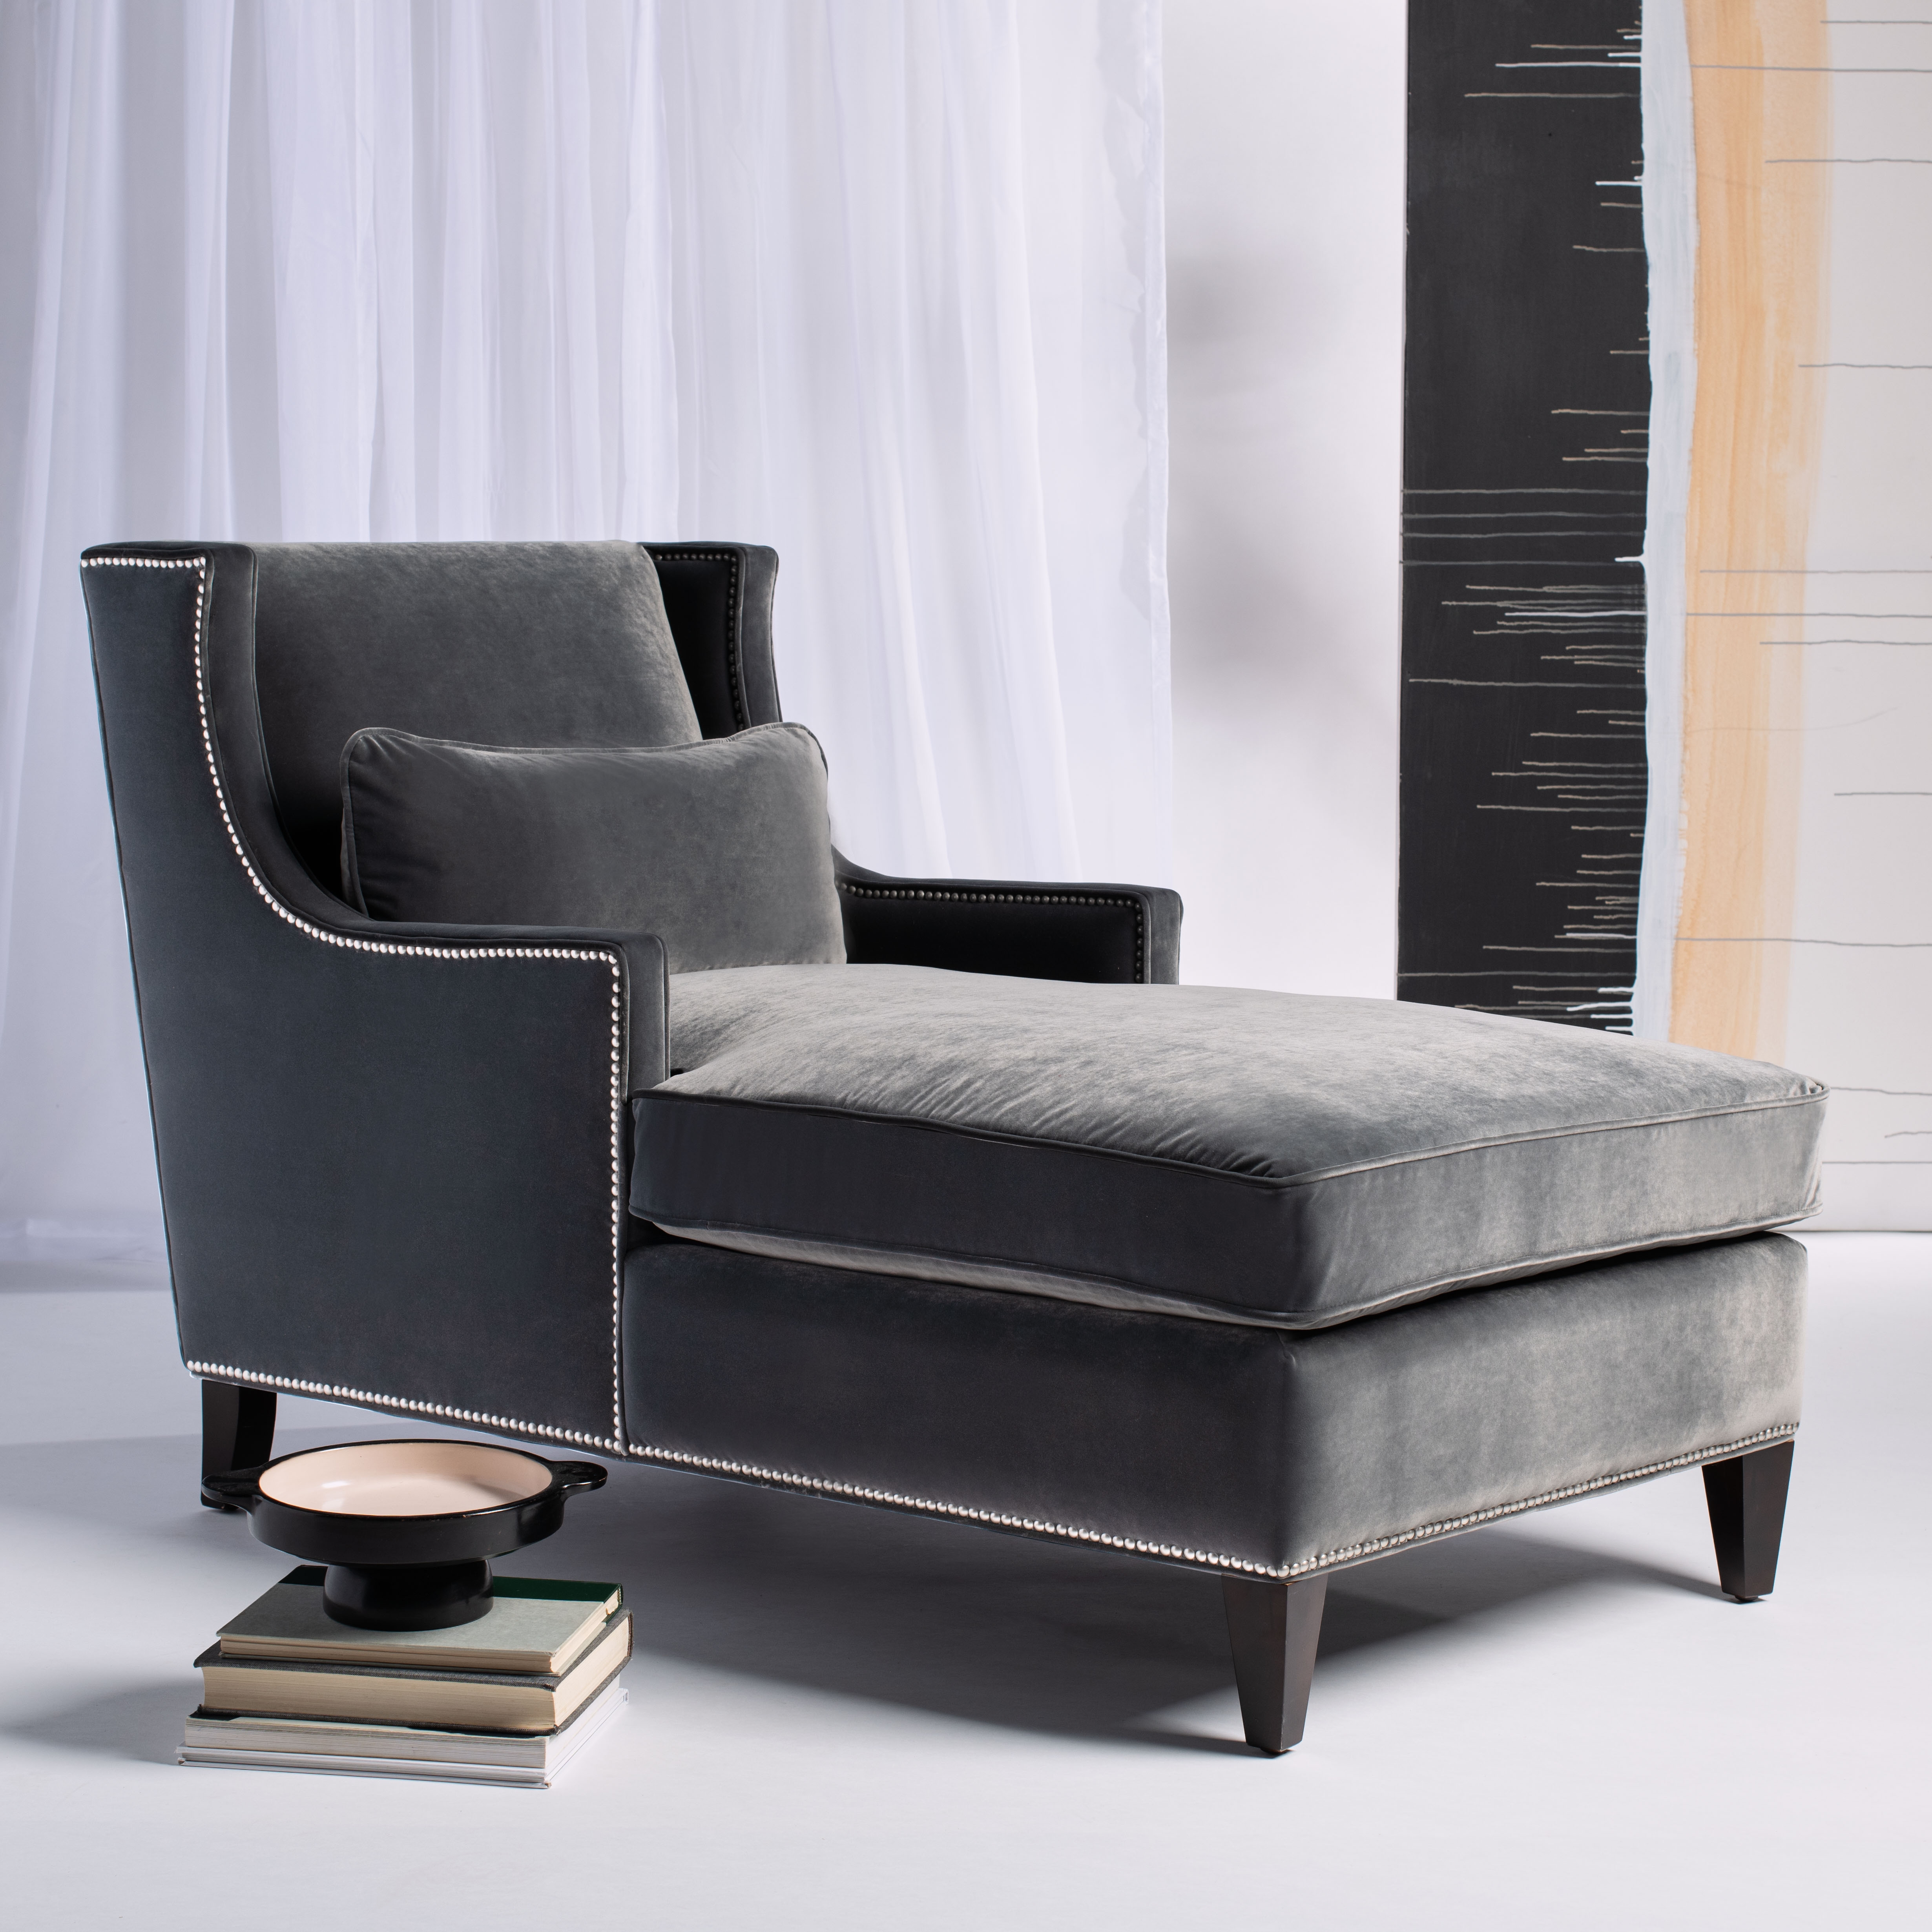 Vitali Studded Chaise - Charcoal - Arlo Home - Image 1